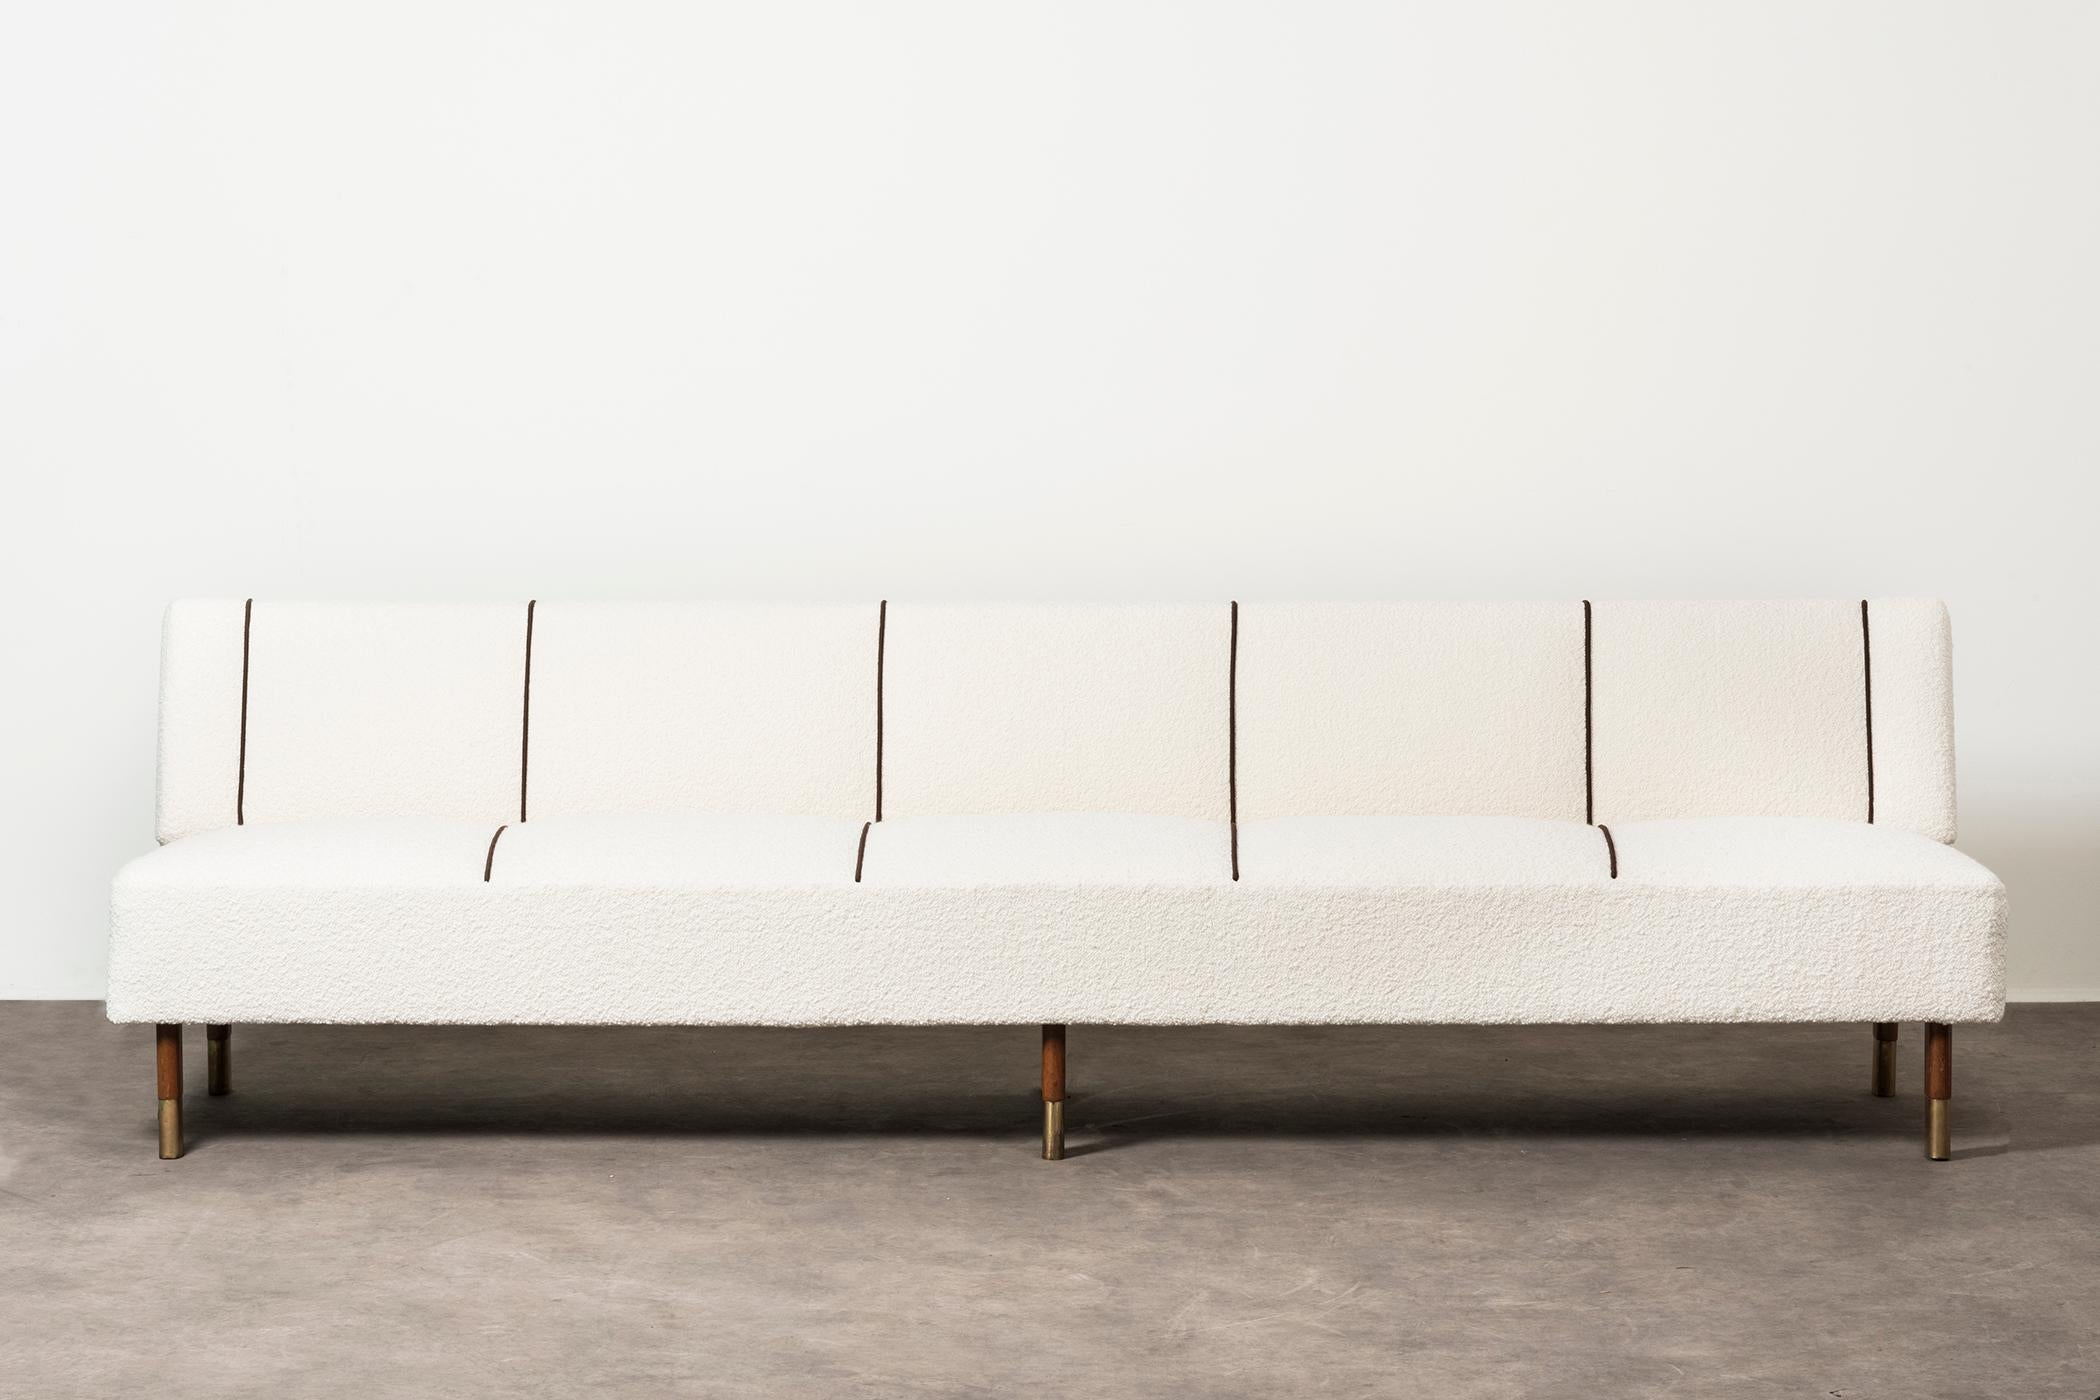 Rare sofa by Alvar Aalto. Finland, 1956. Provenance: Kansanela¨kelaitos (The Social Insurance Institution of Finland). Example provided with original label. Wood, brass, fabric upholstery. 270 x 72 x h 74 cm h seduta 43 cm. 106.2 x 28.3 x H 29.1 in